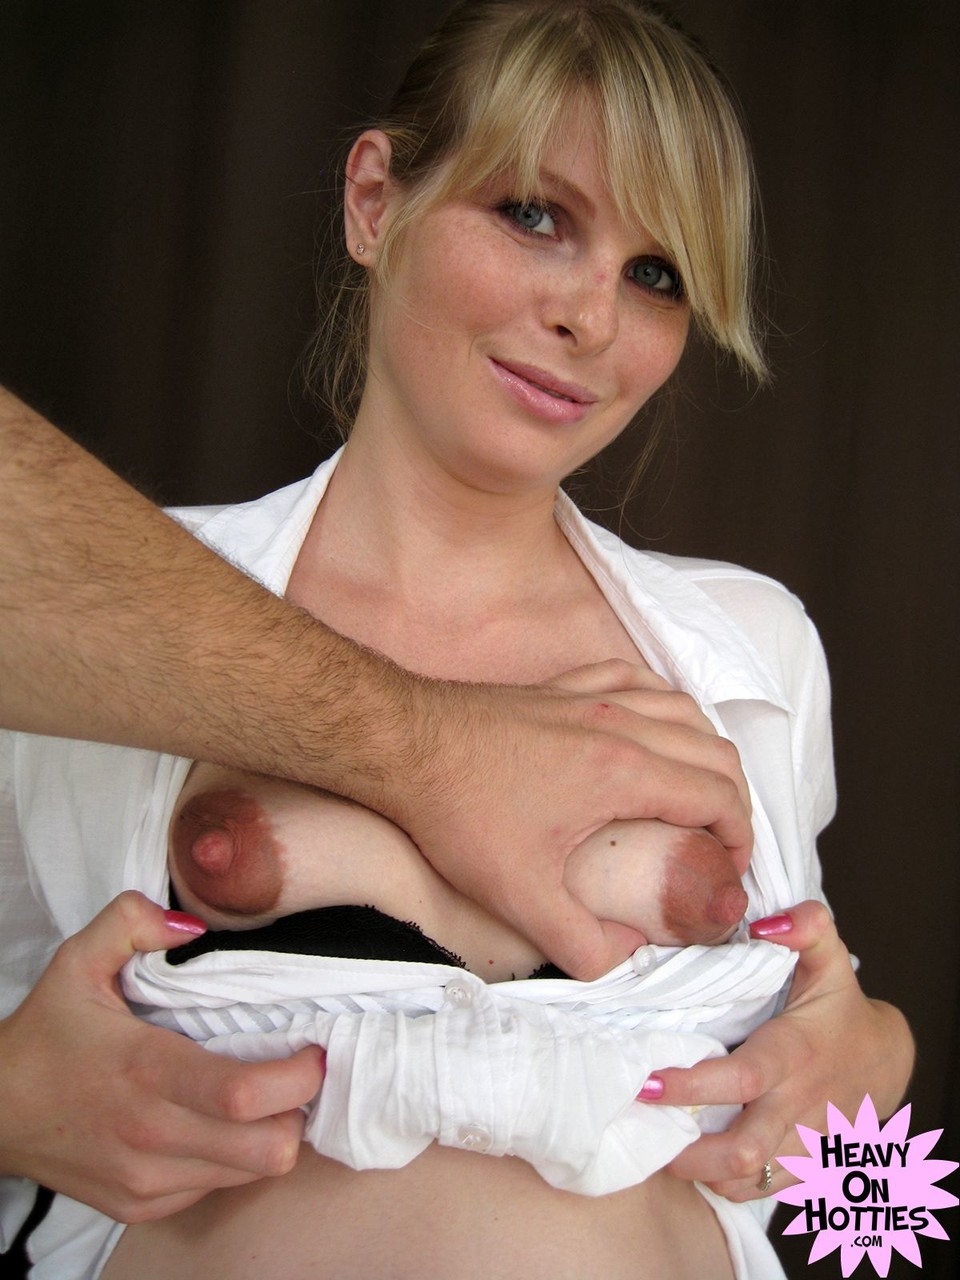 Pregnant amateur Wiska gets jizz on her face during a POV blowjob foto porno #424010546